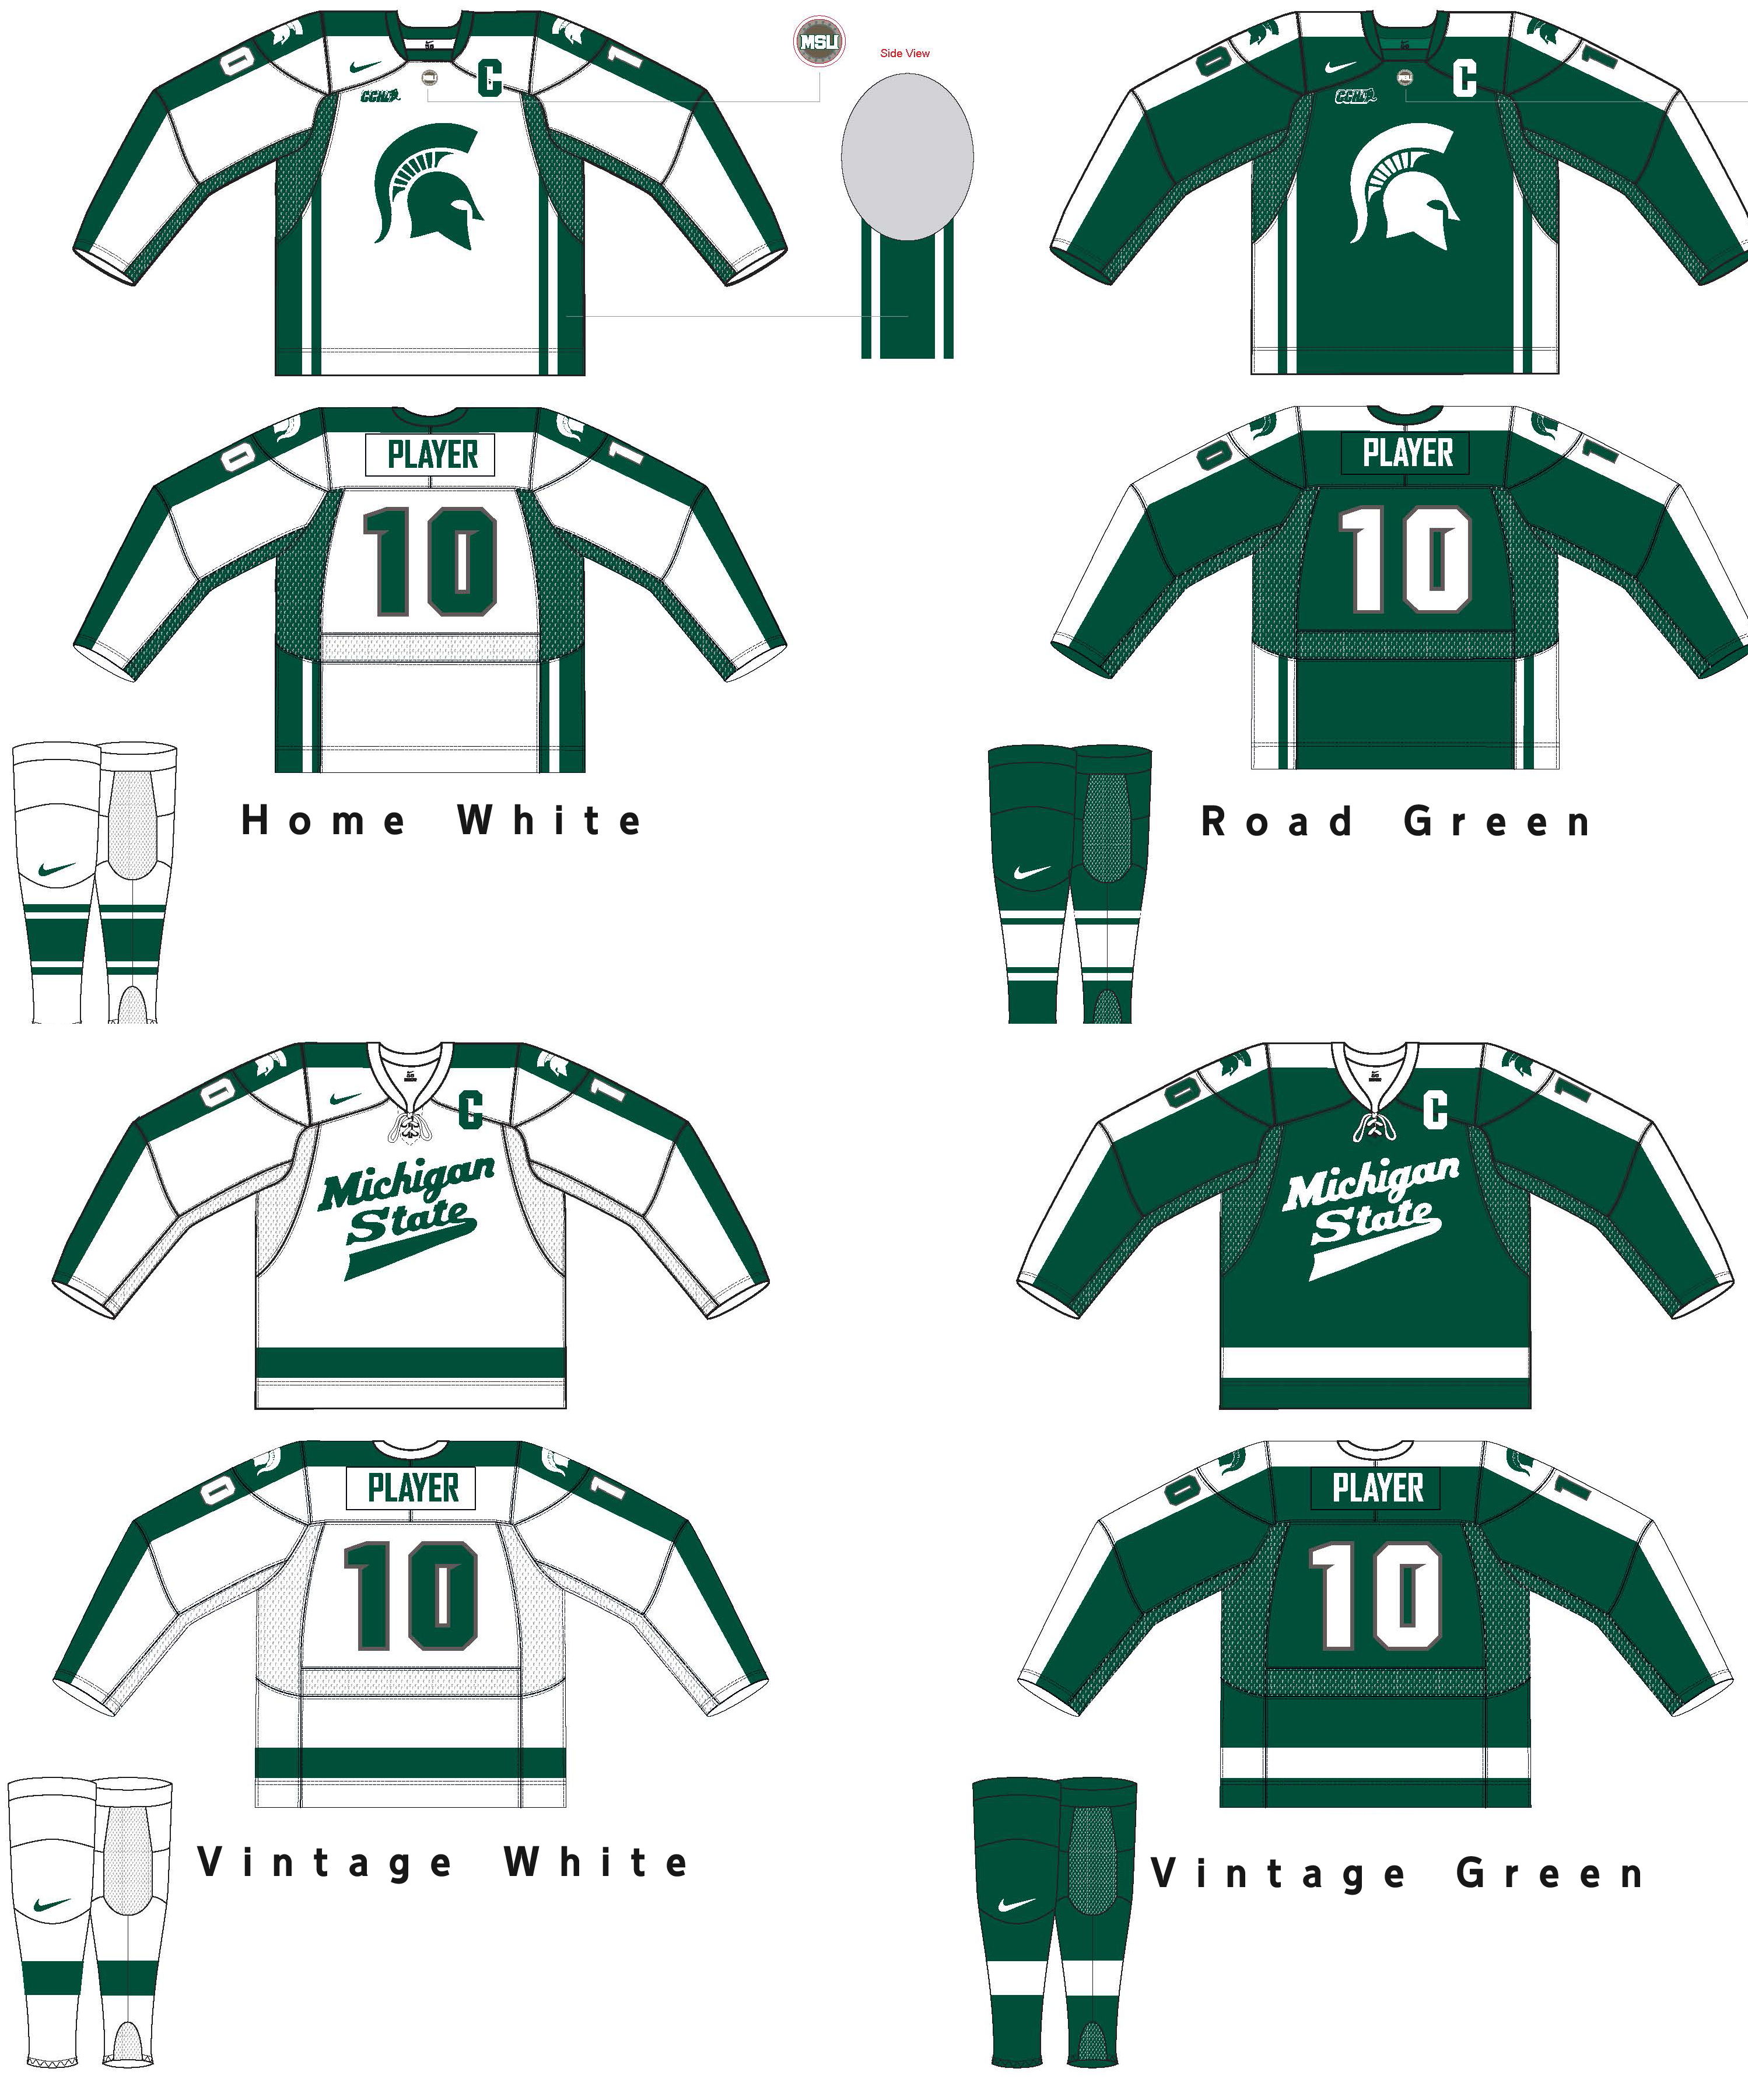 New Spartan Hockey Jersey Design Released - Michigan State University  Athletics